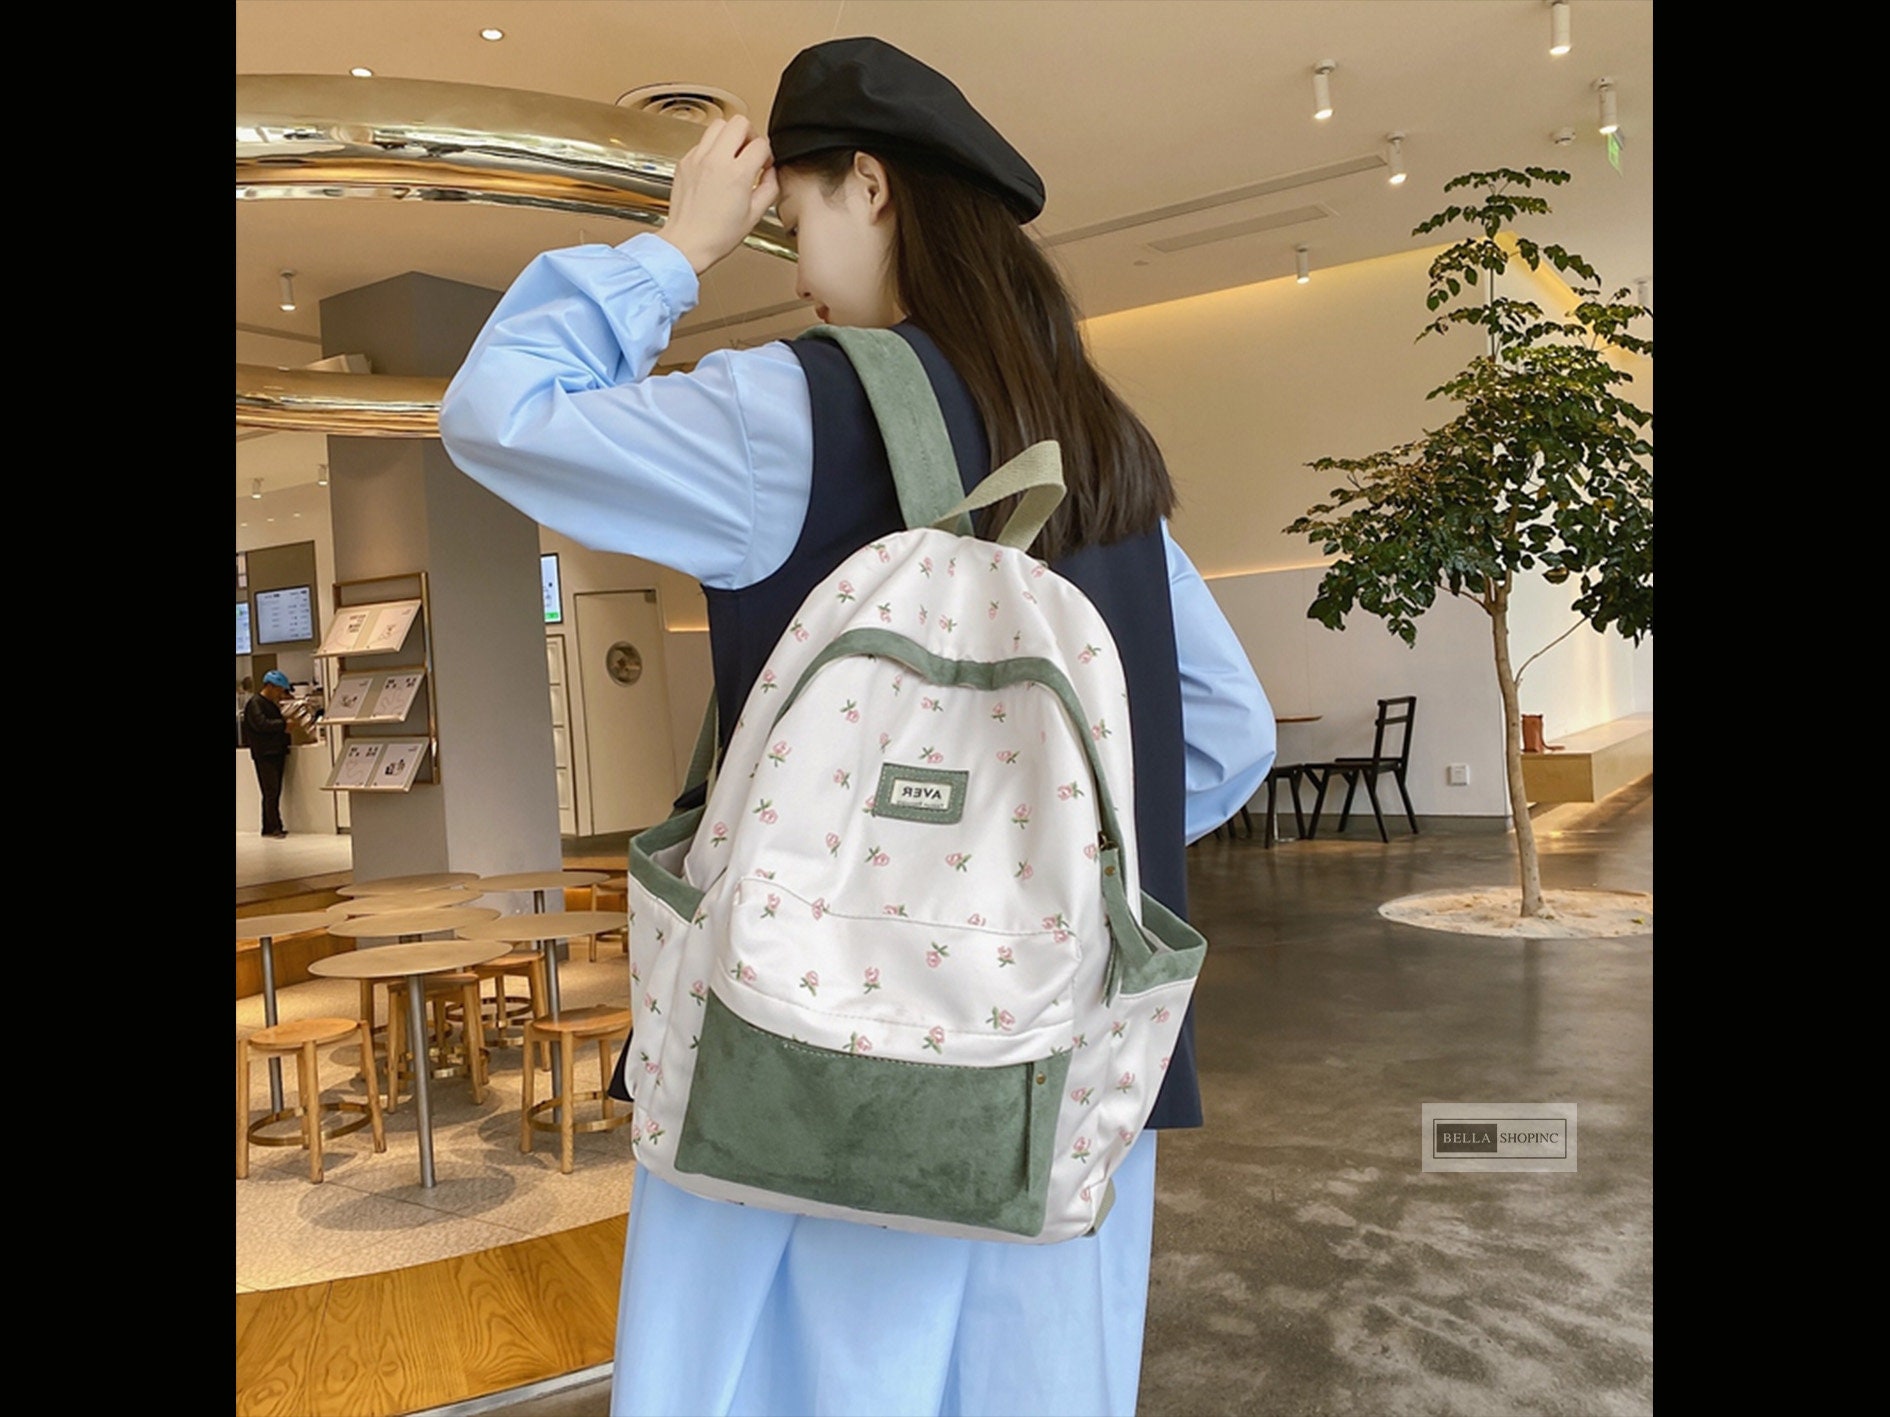 Female Kawaii College Backpack Women Nylon School Bag Girl Travel